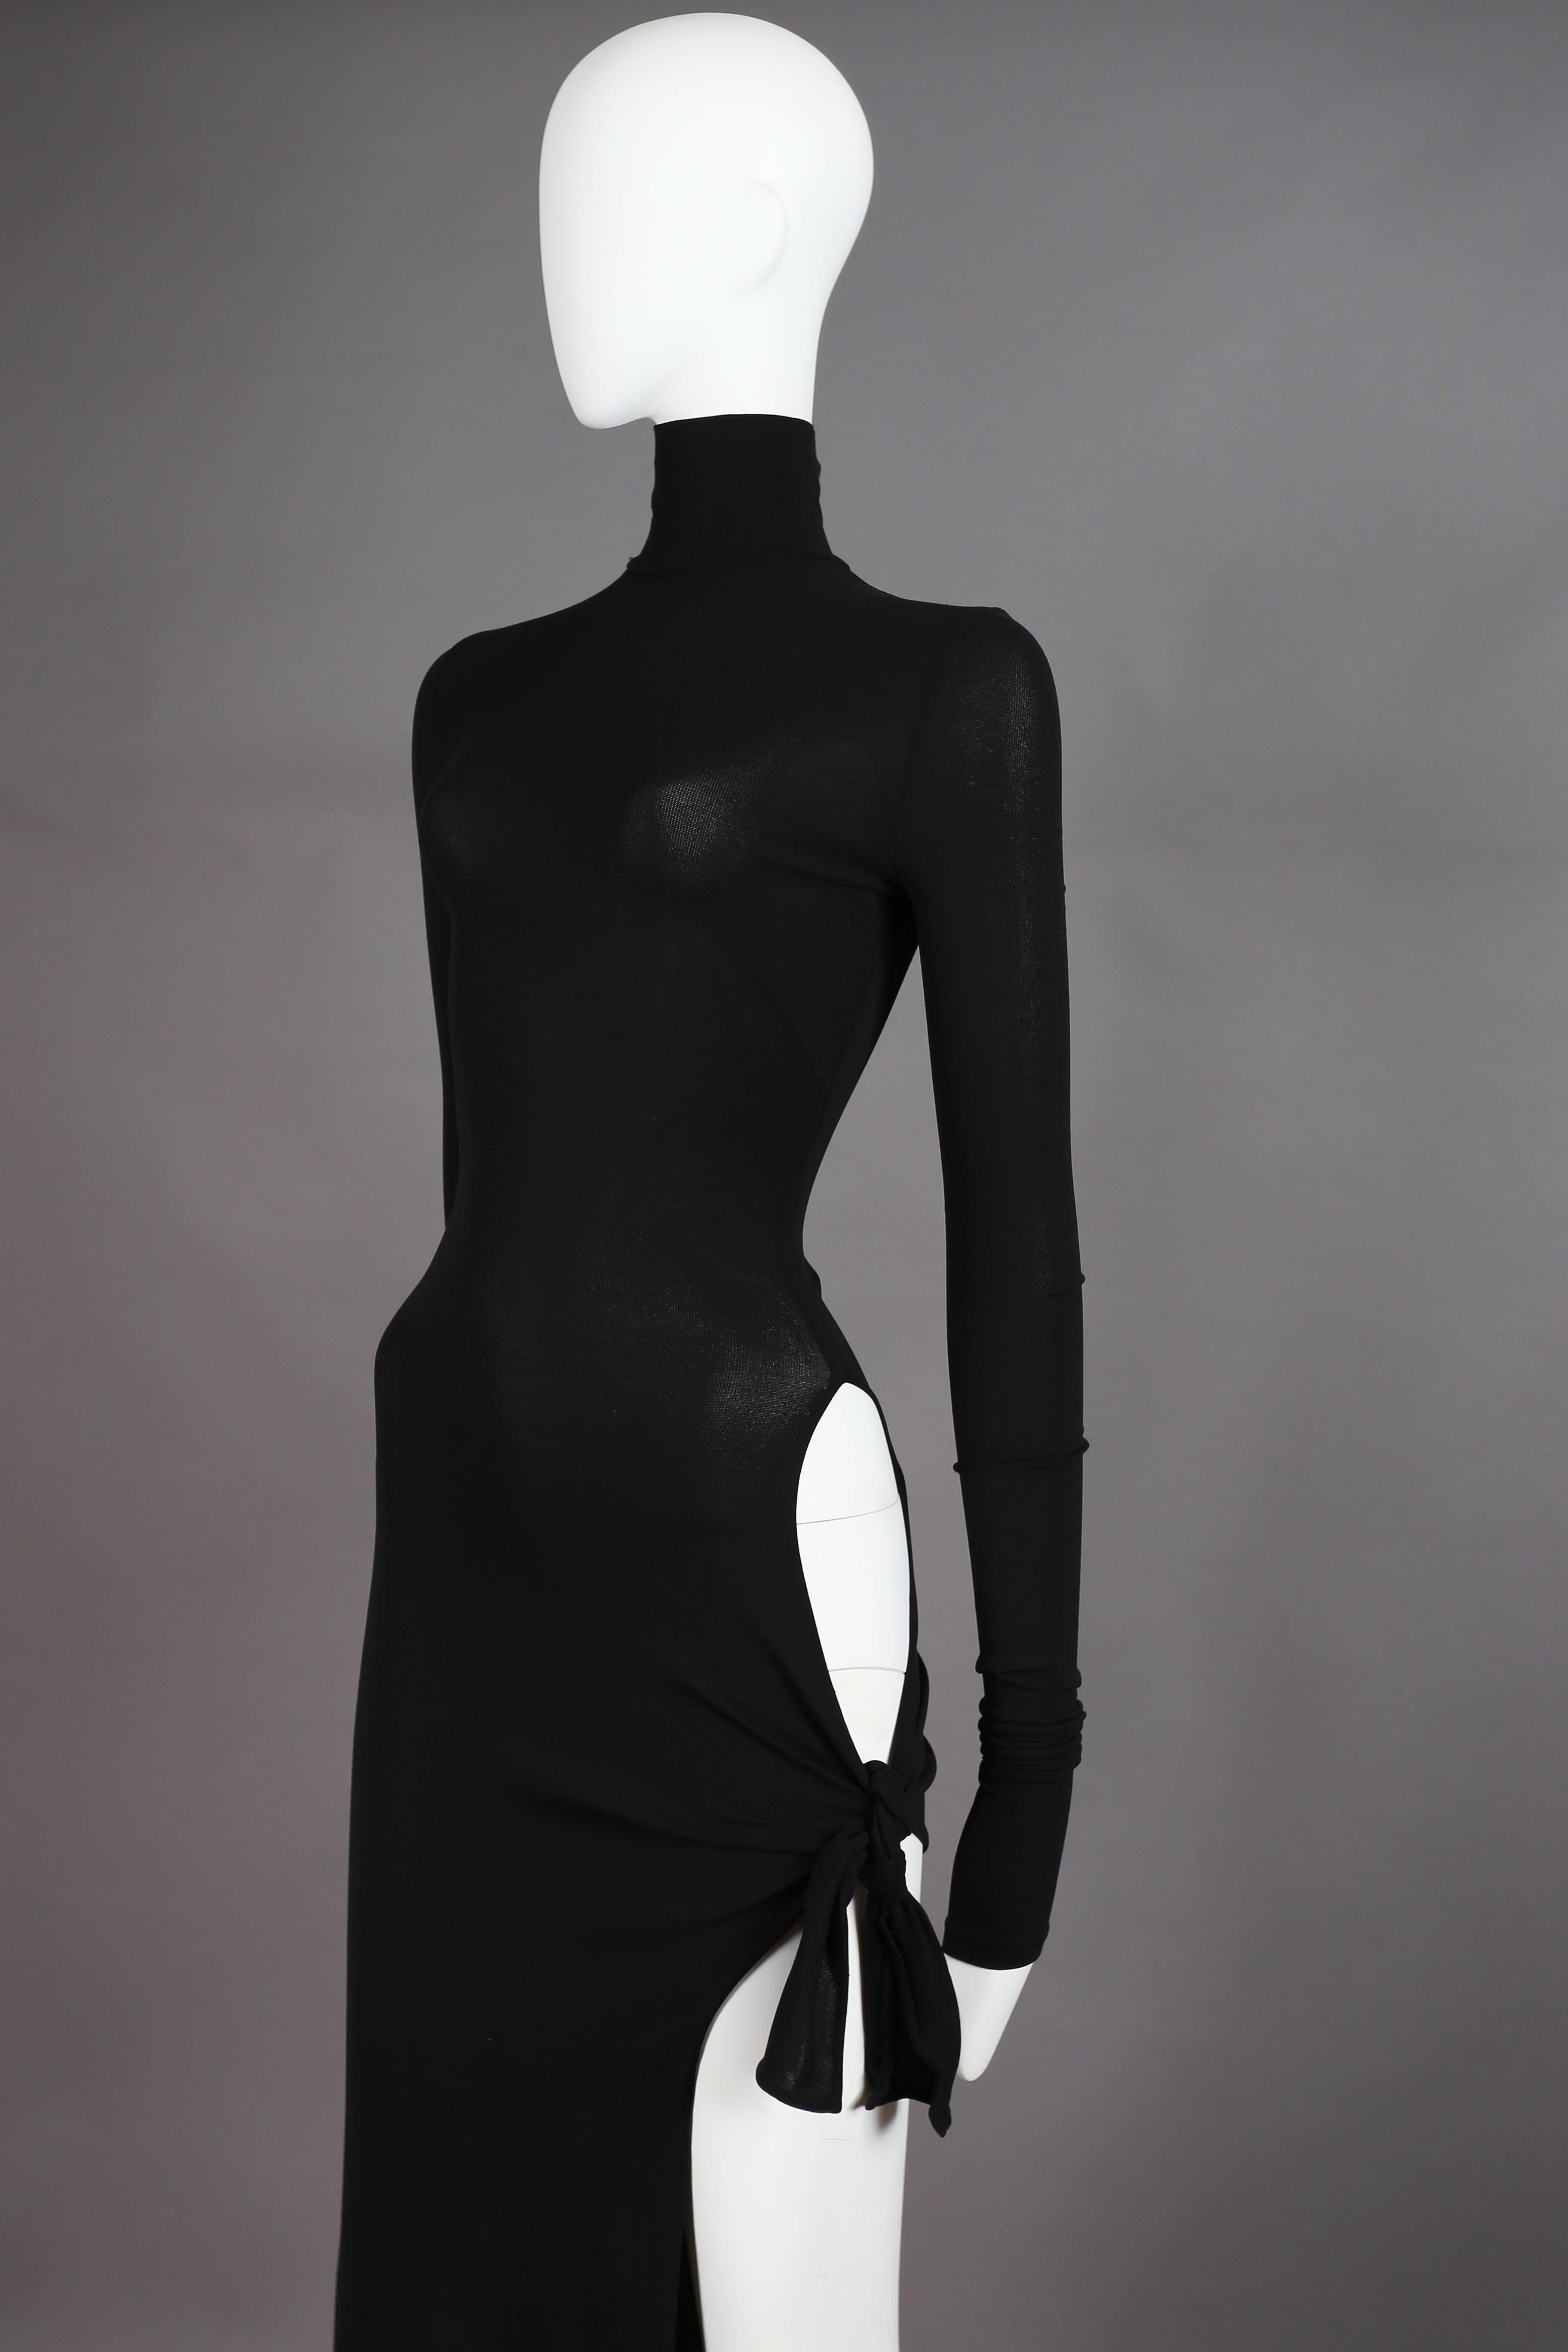 Women's Dolce & Gabbana black bodycon evening dress with cut out, circa 2001